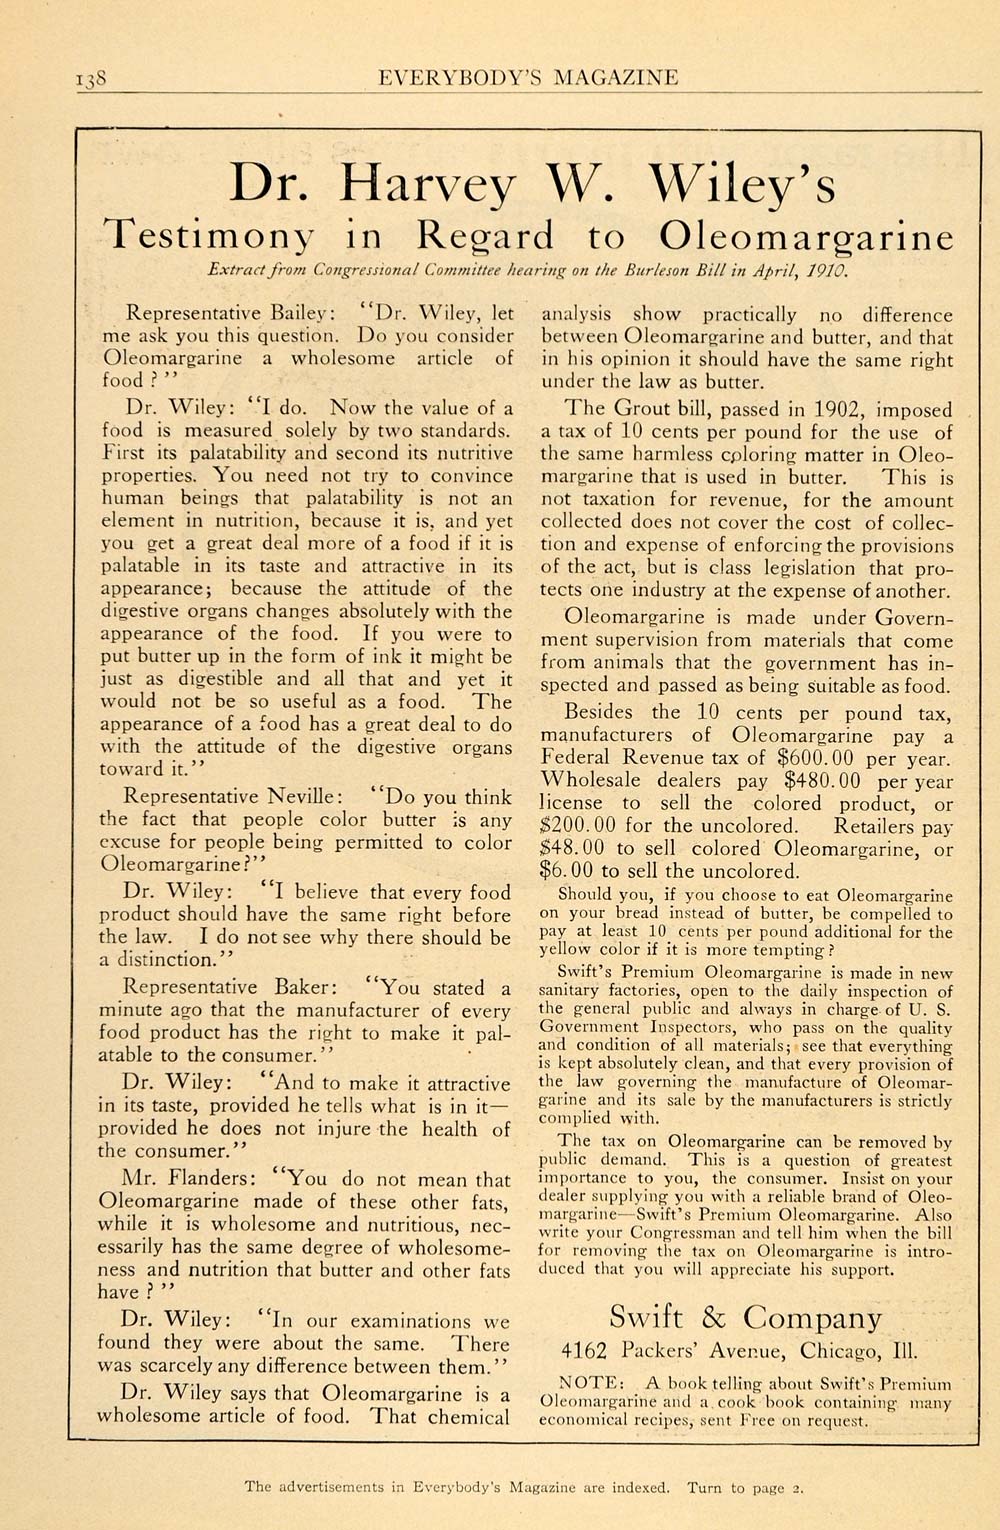 1911 Vintage Ad Swift Oleomargarine Tax Harvey W. Wiley - ORIGINAL OLD3A